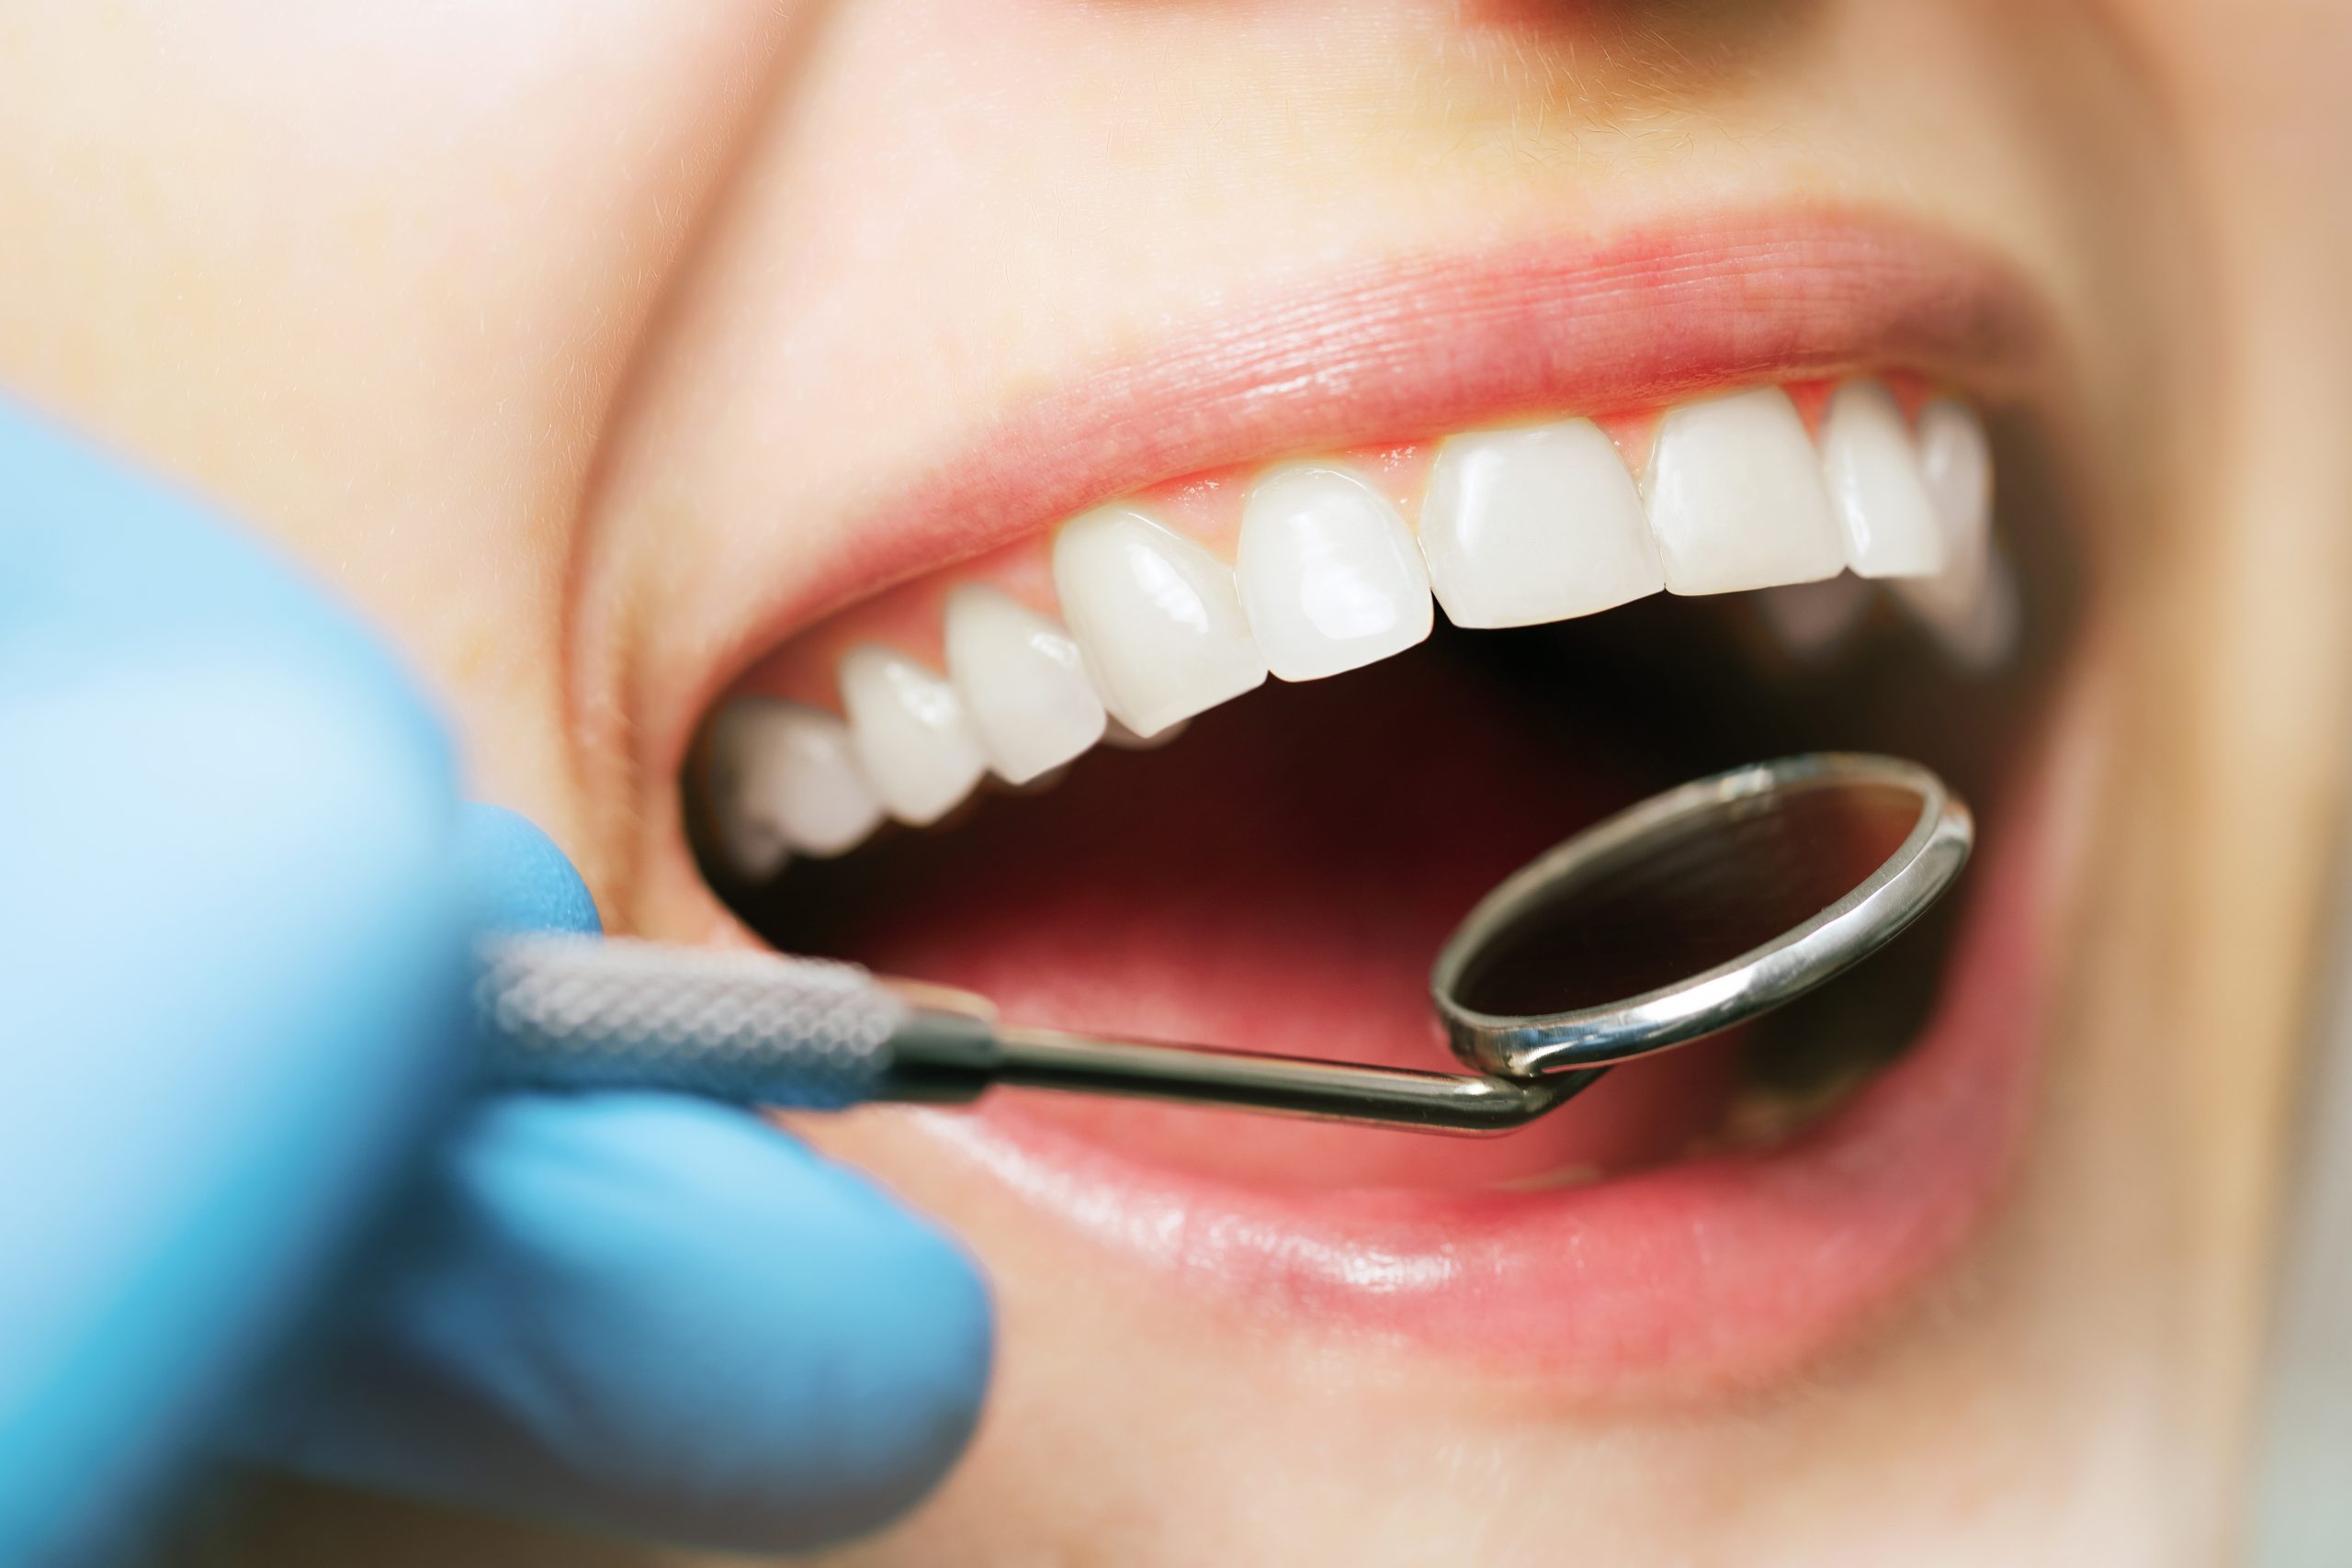 The benefits of regular dental checkups